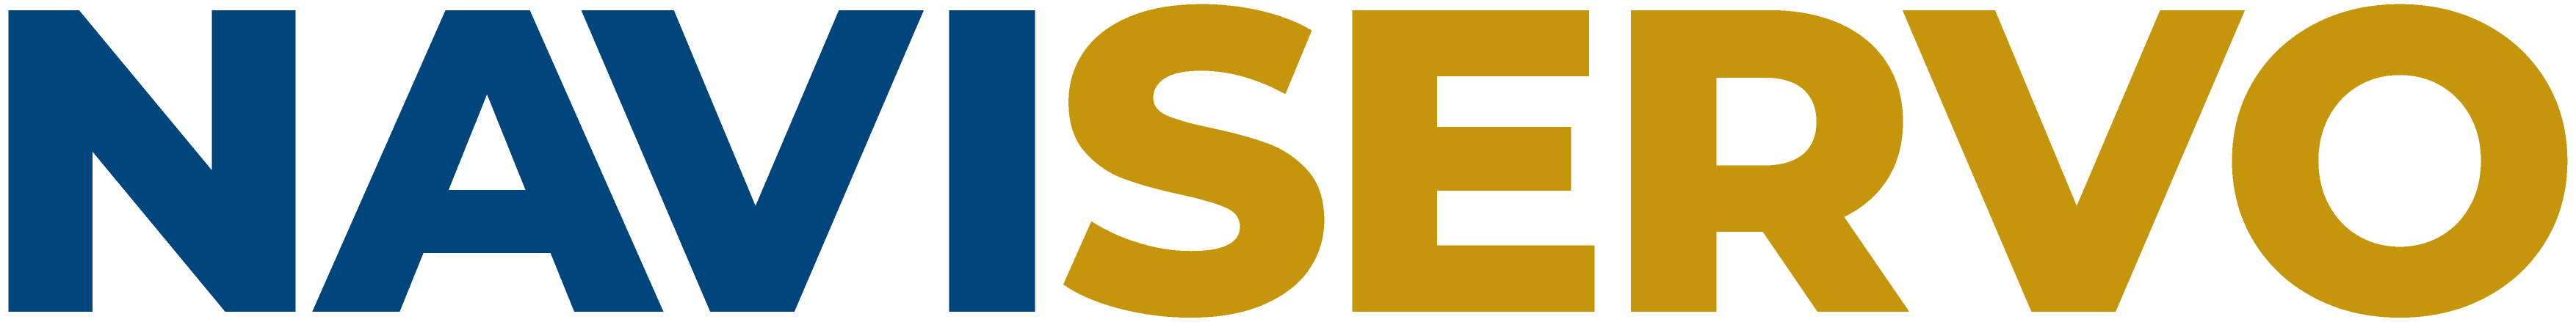 Naviservo logo